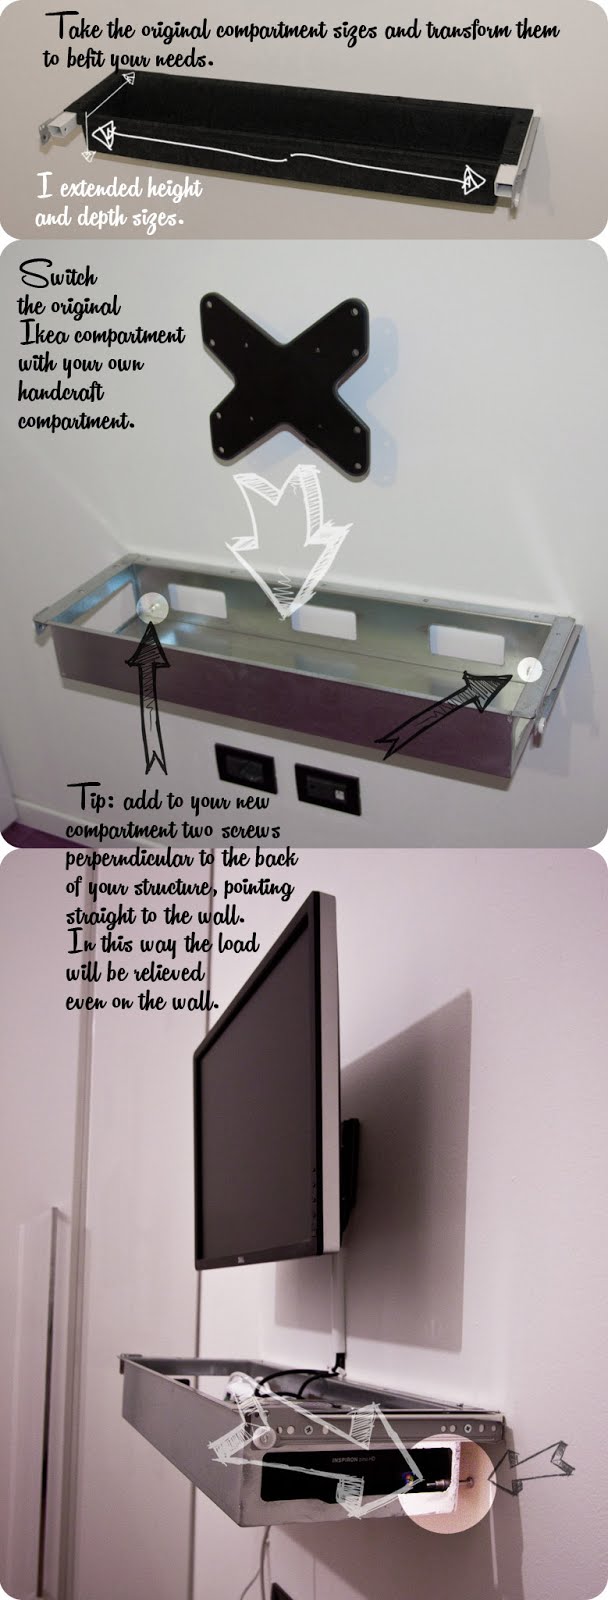 Mini PC float-and-slide desk, IKEA Hackers